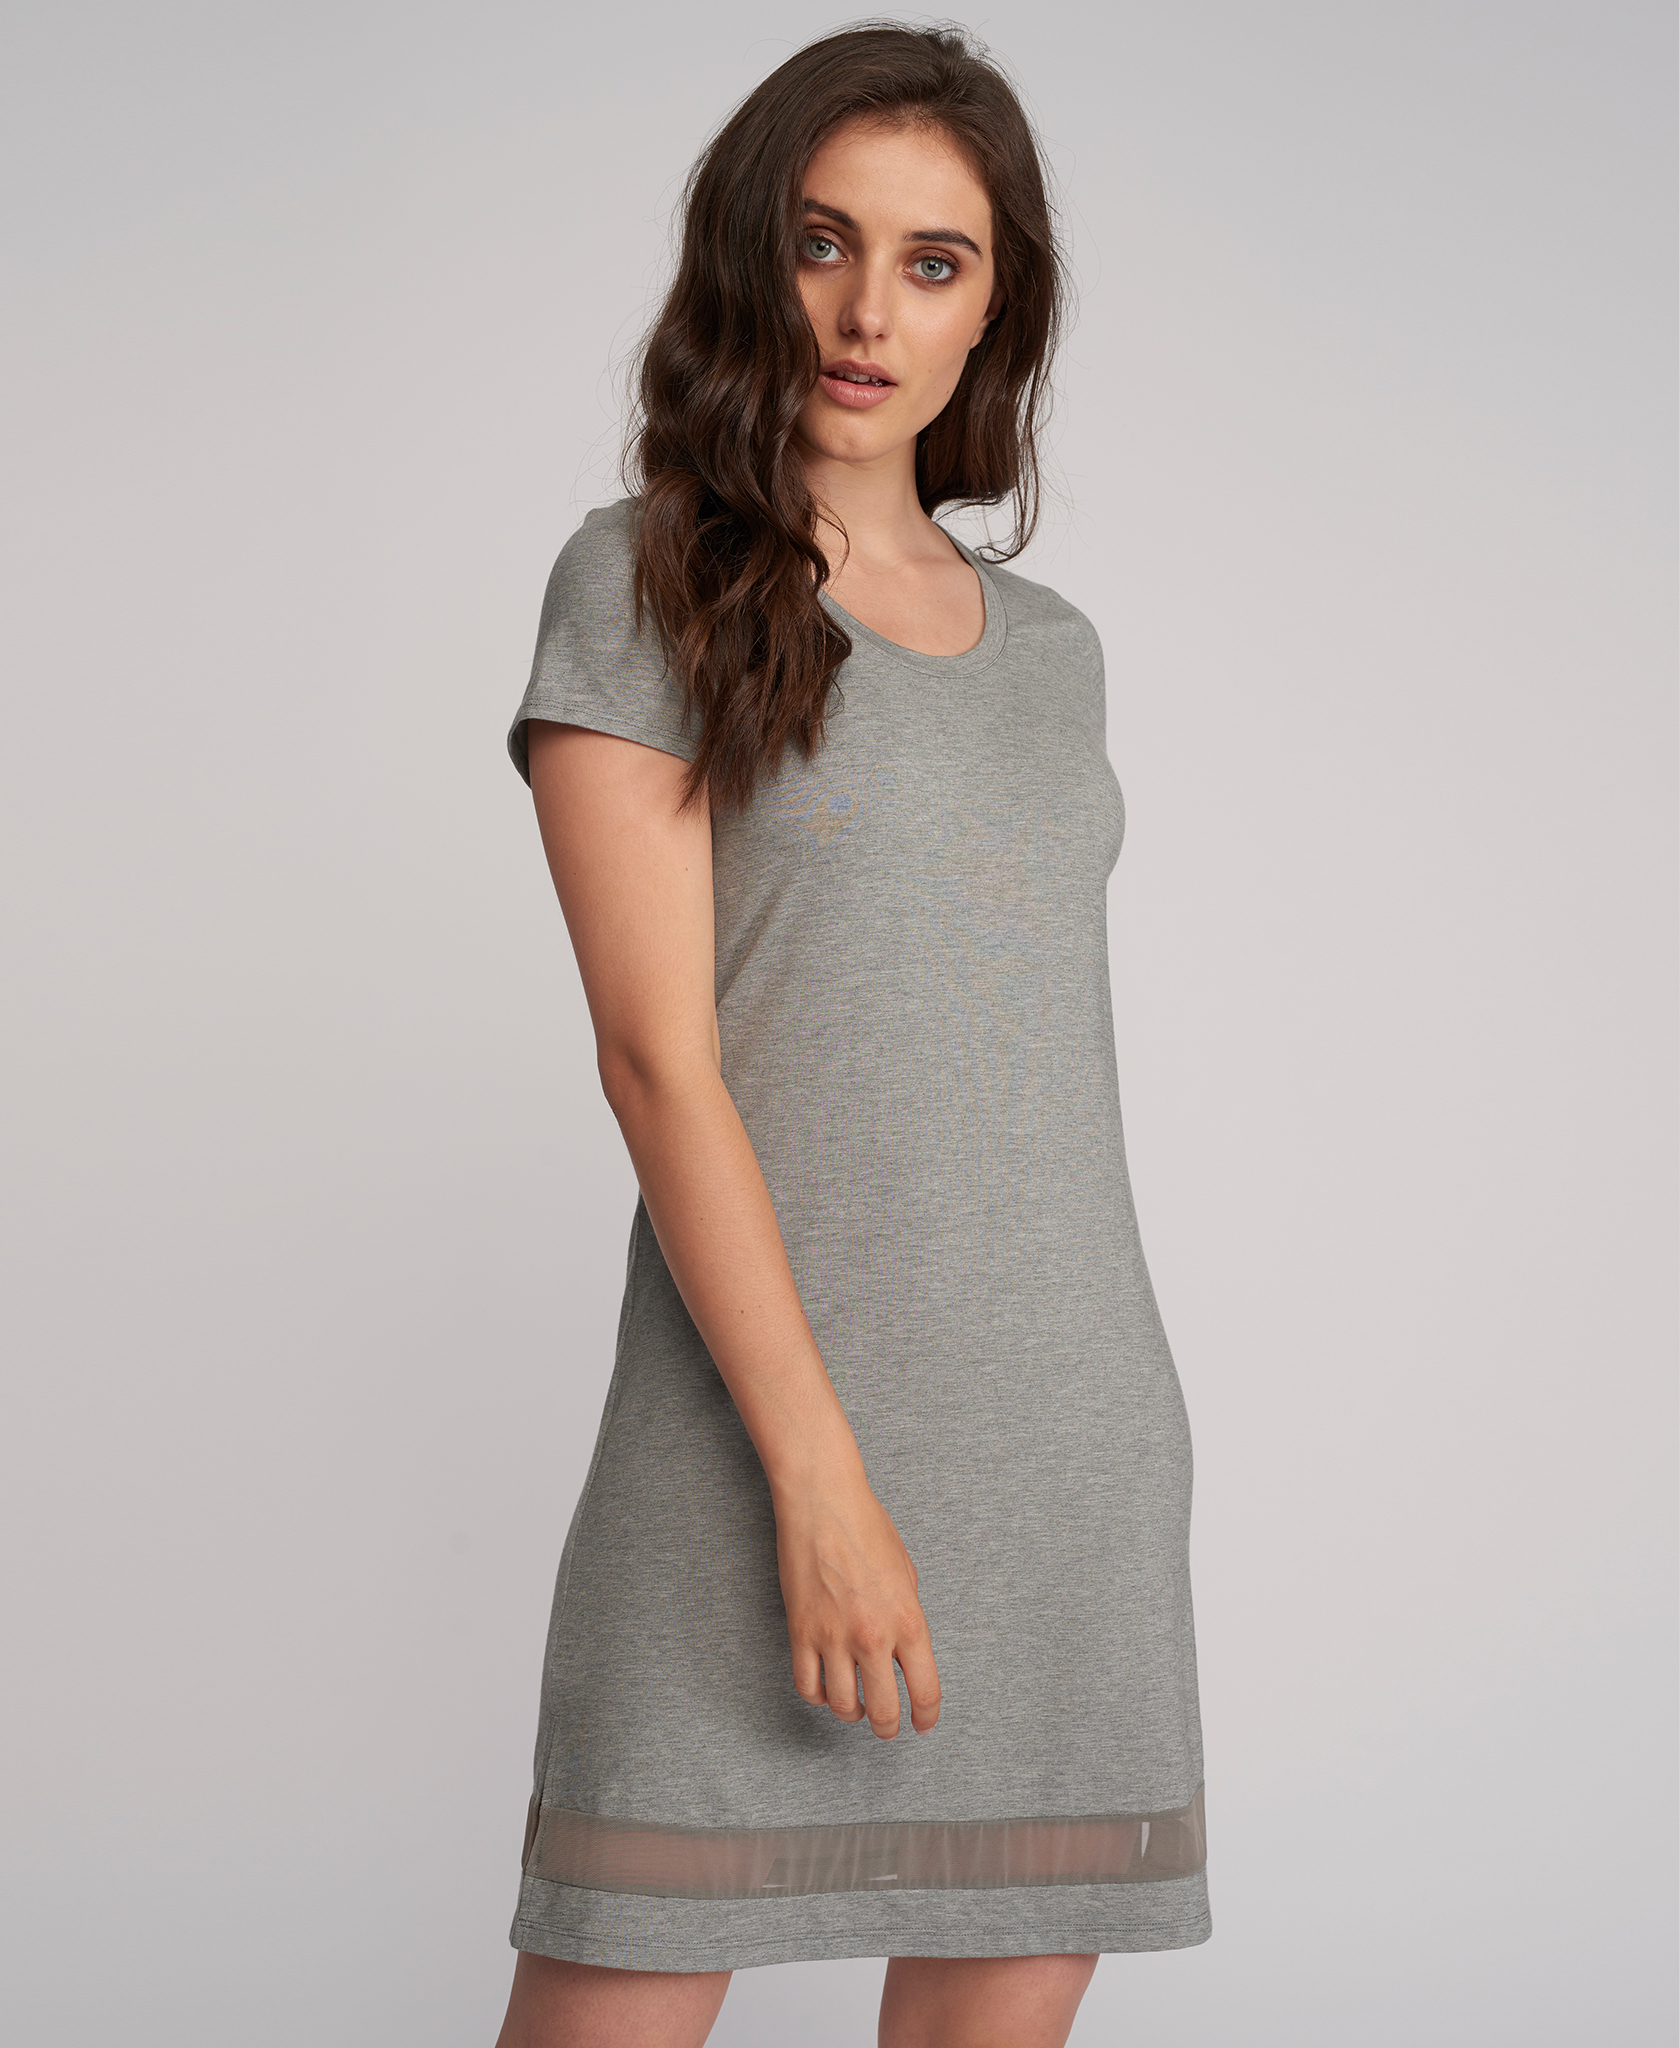 Lusome Everyday Womens Moisture Wicking Nina Sleep T-Shirt Size XS-XL 